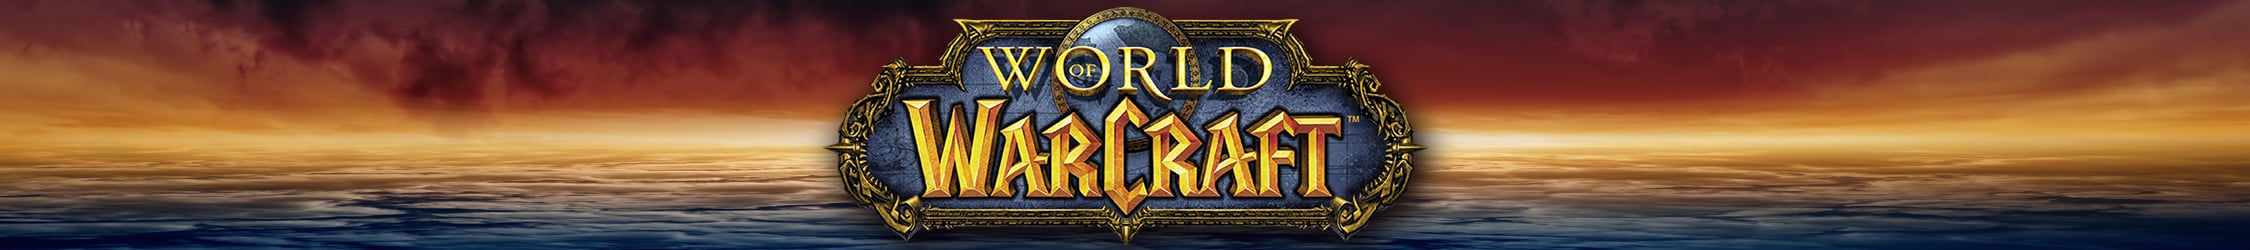 World of Warcraft Landing Page Banner